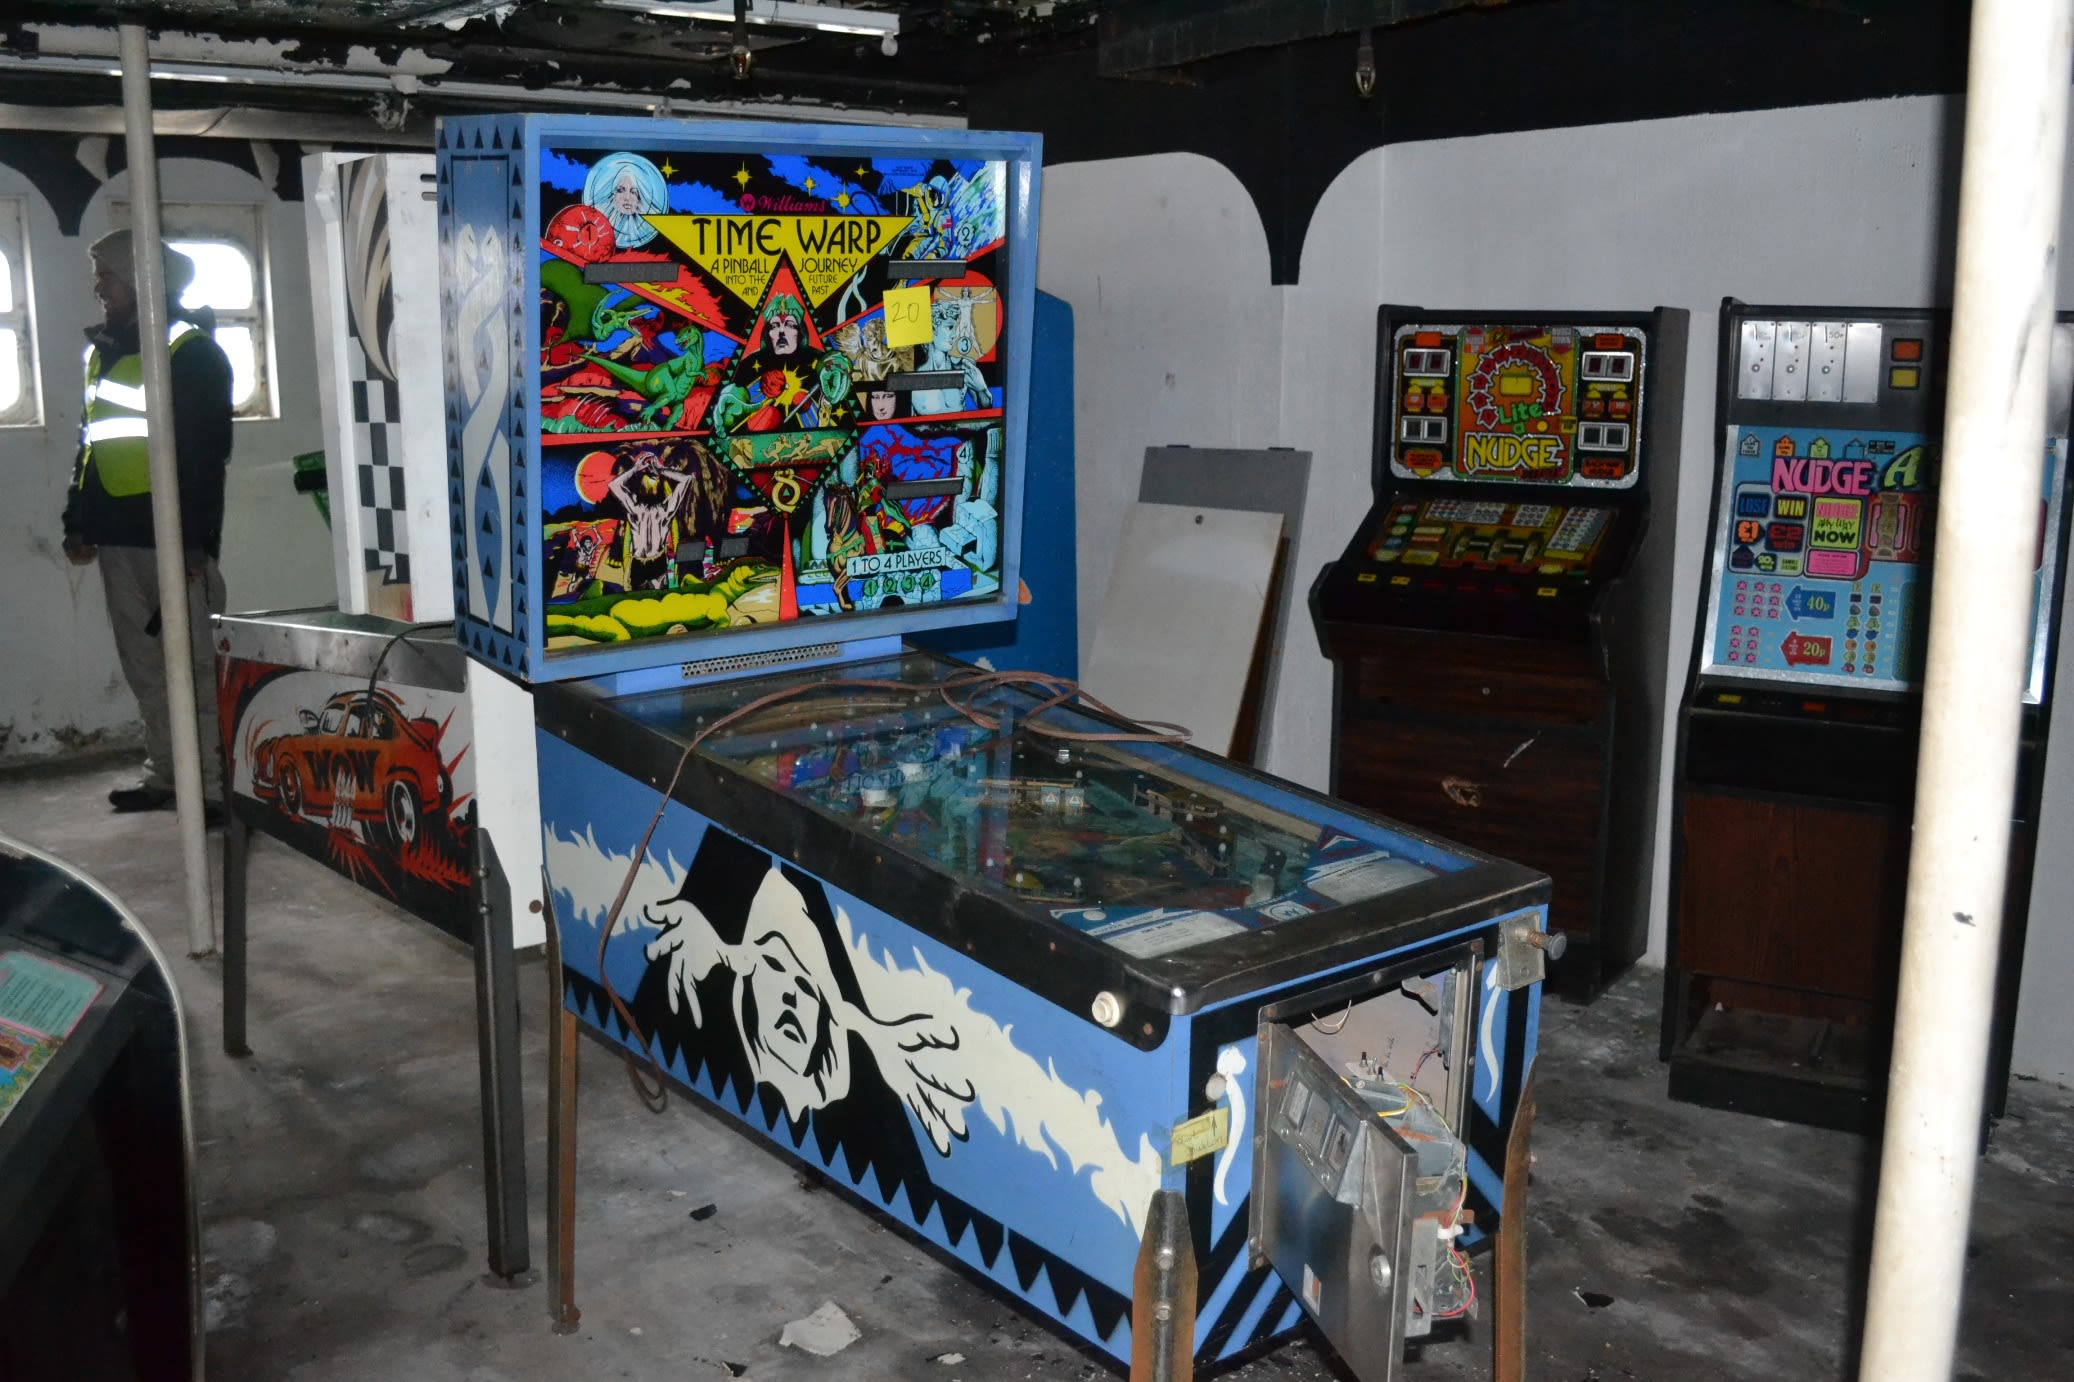 Home  Game Room Treasures Pinball & Arcade